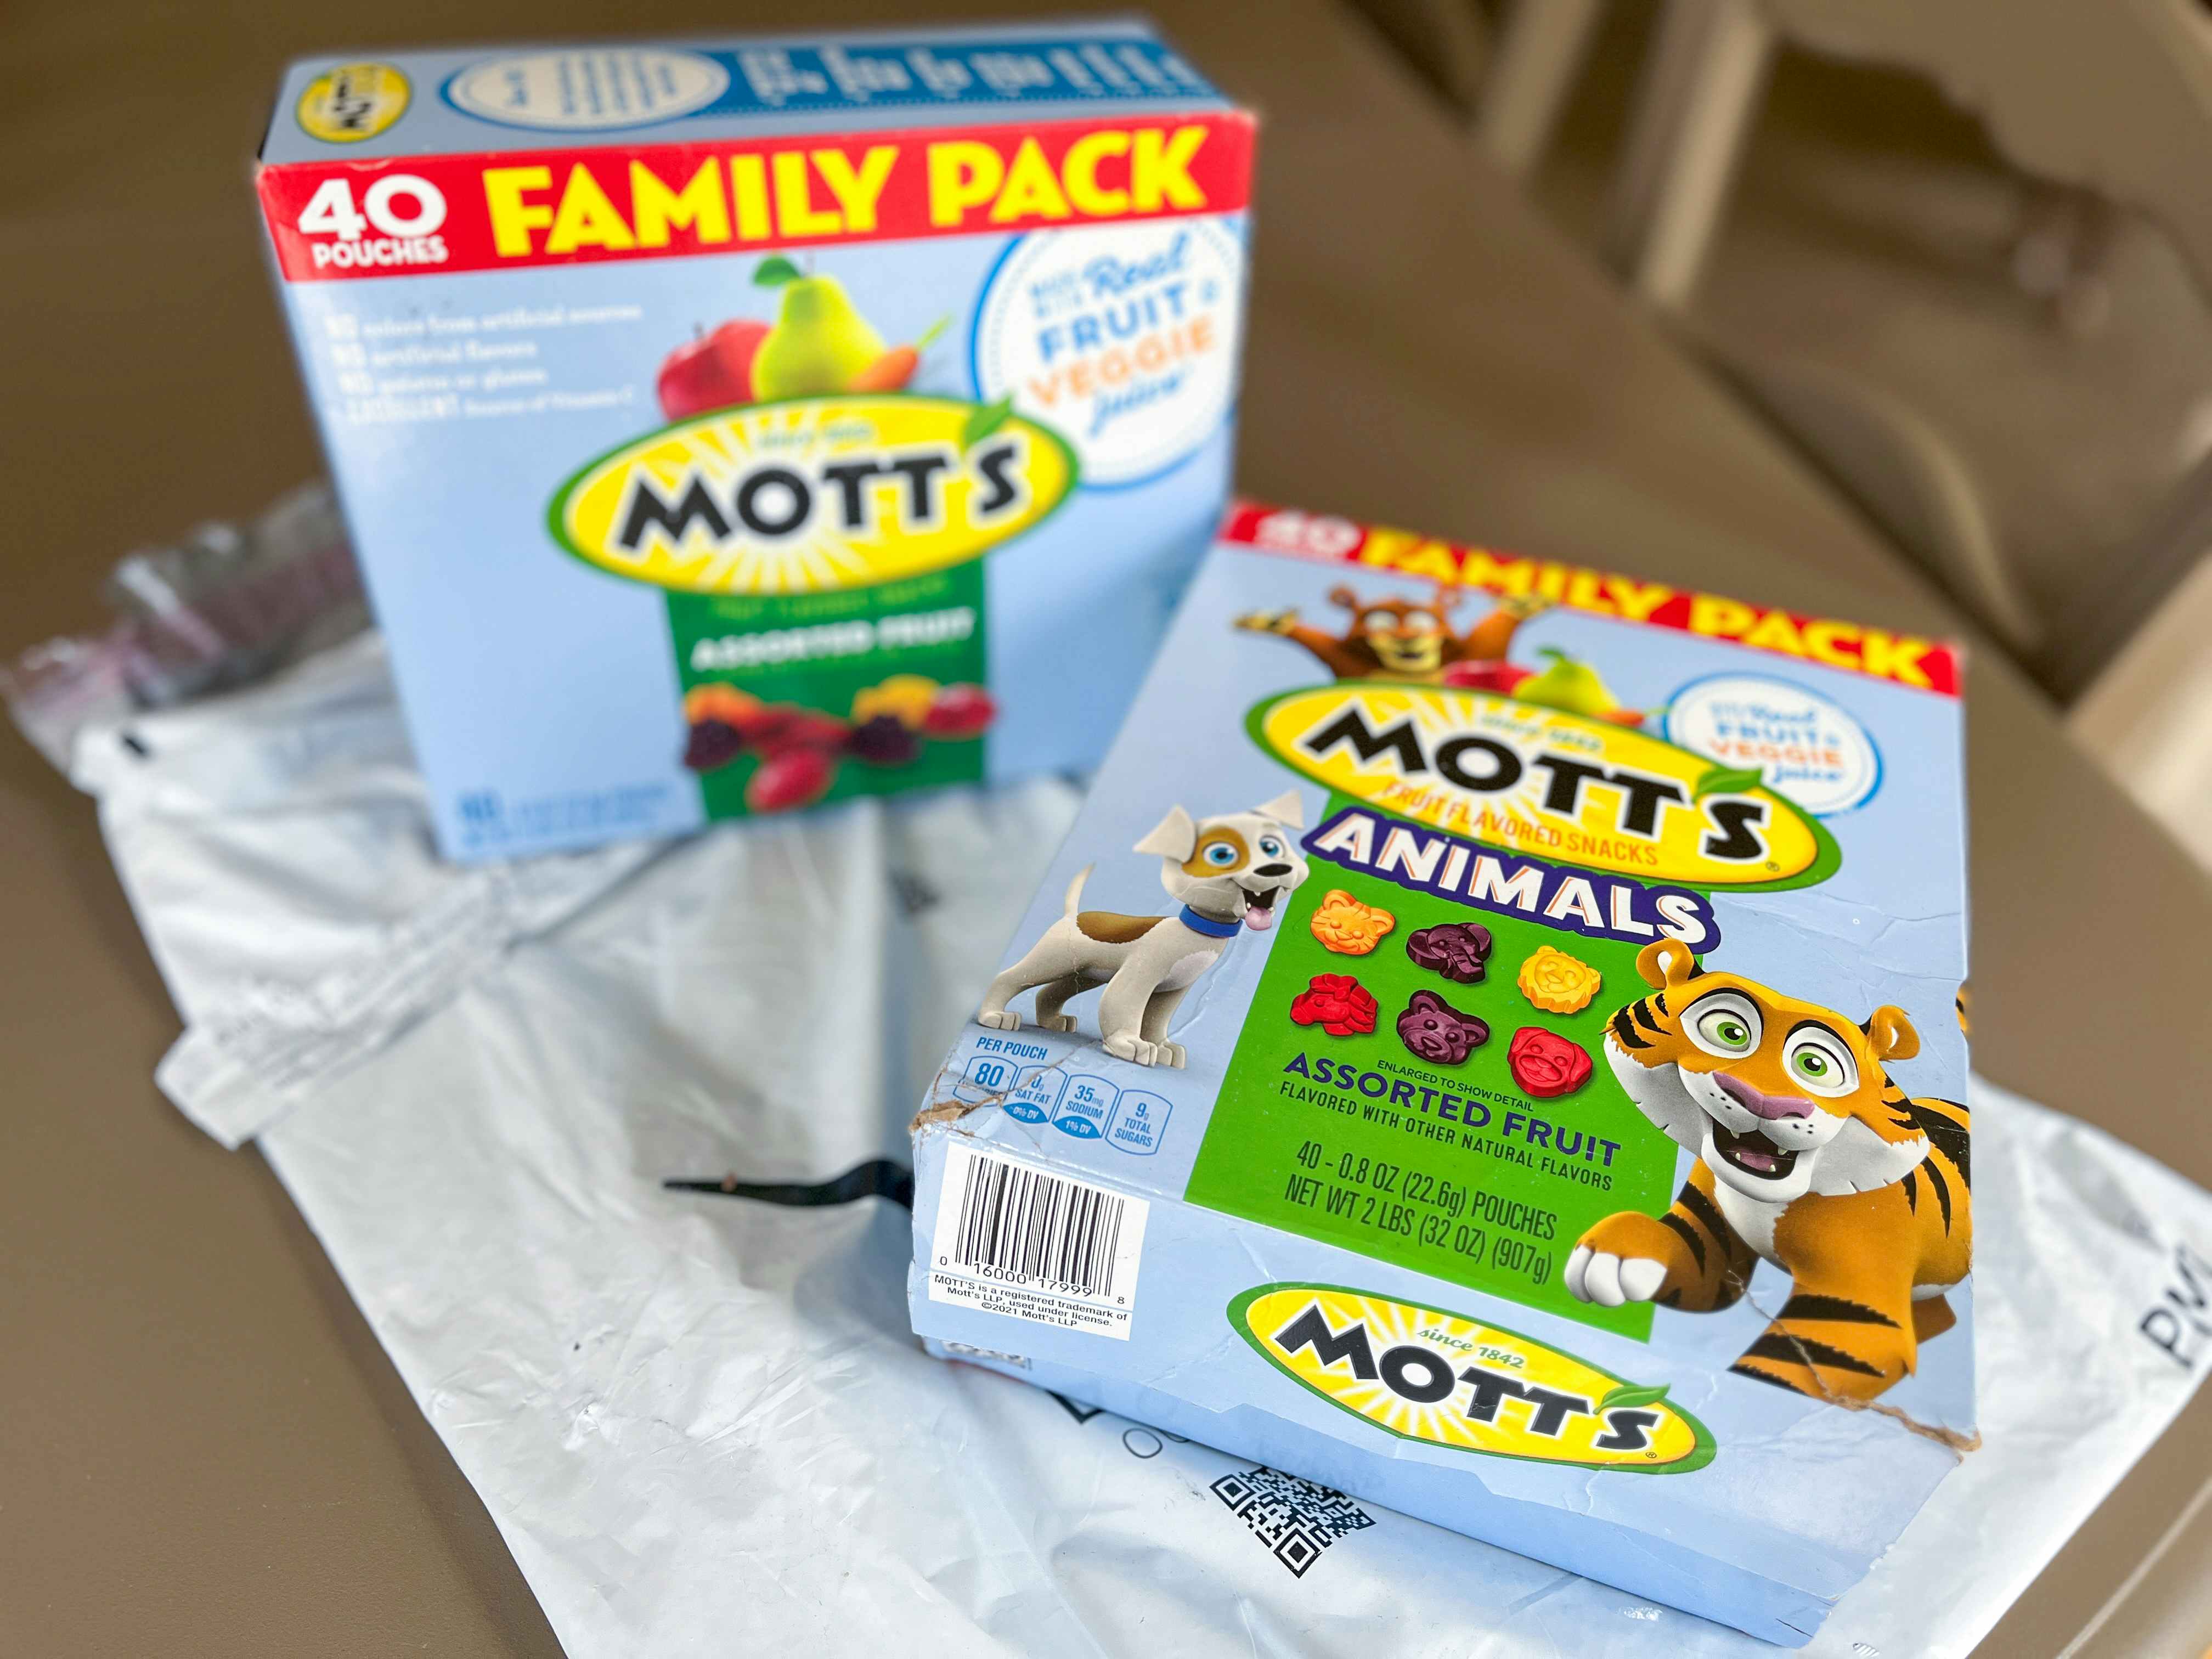 two family pack boxes of motts fruit snacks on amazon bag